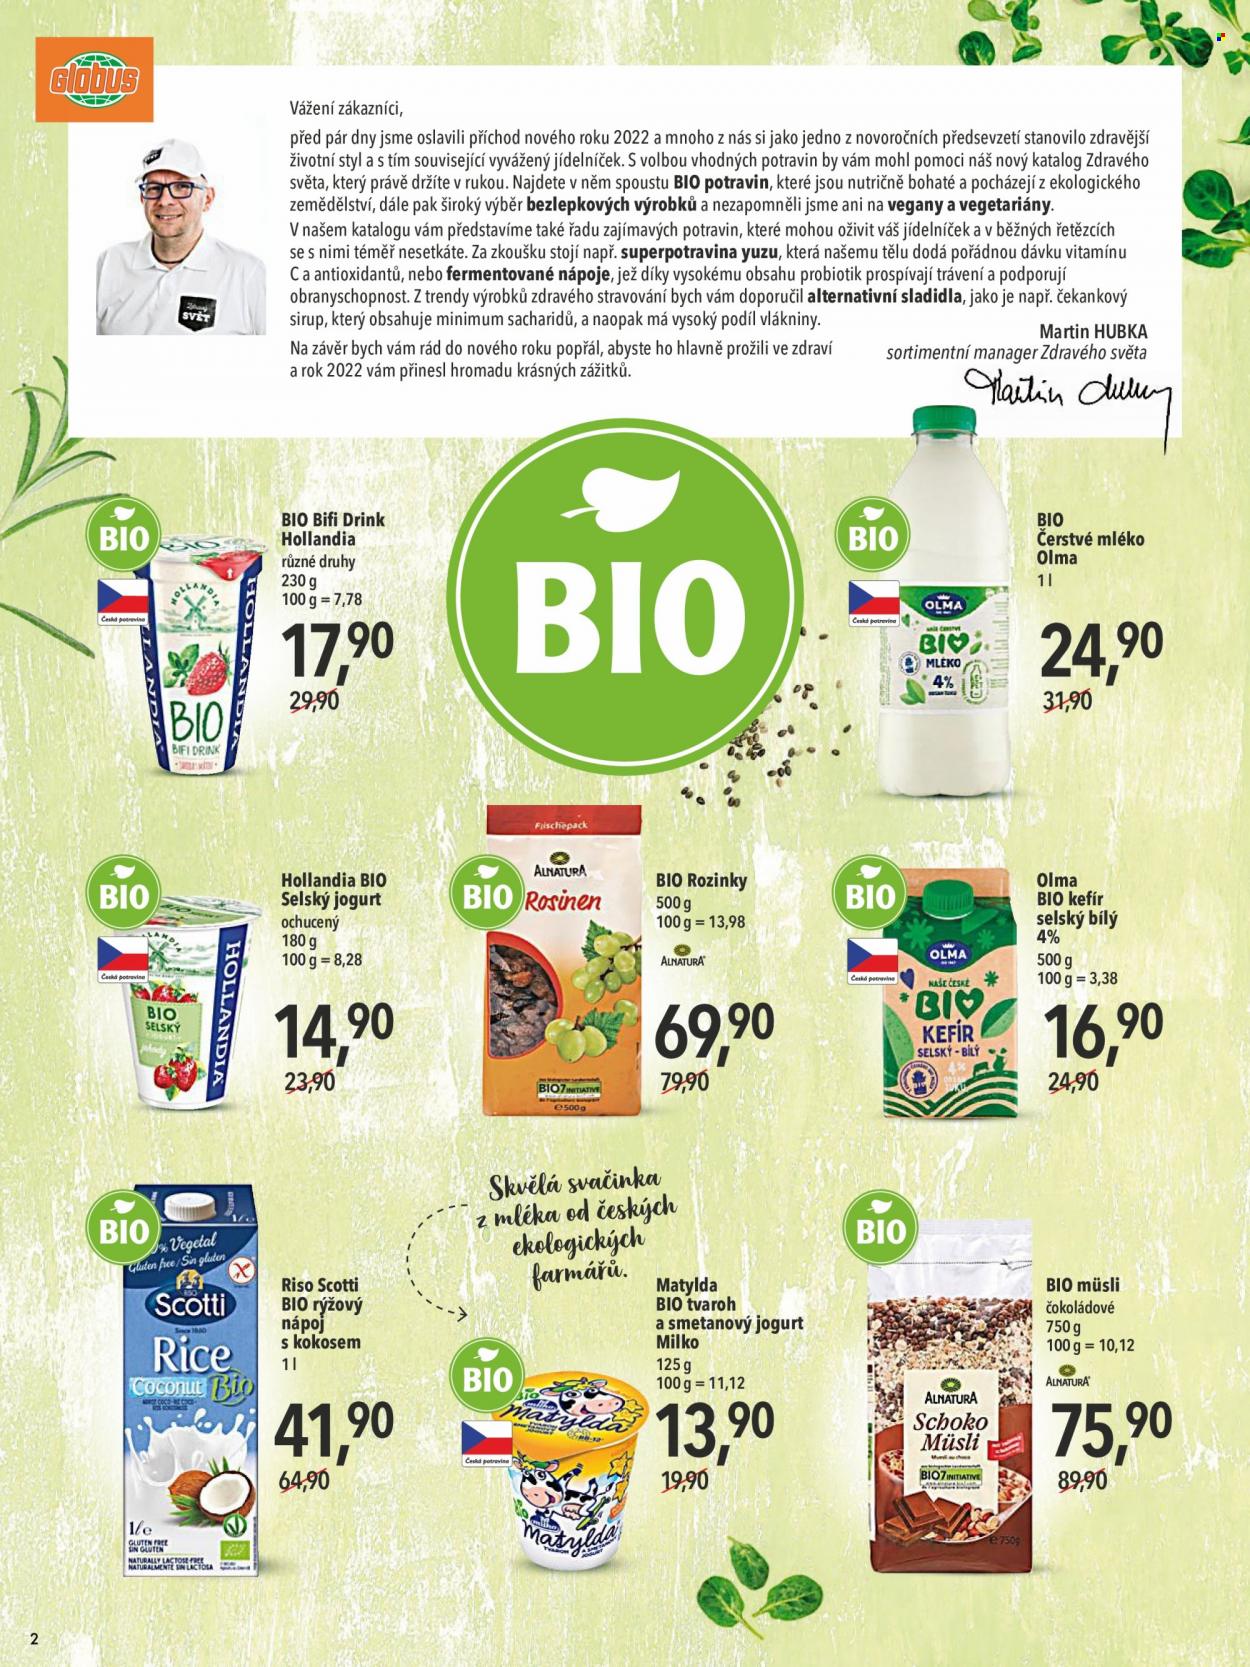 thumbnail - Leták Globus - 13.1.2022 - 1.2.2022 - Produkty v akci - Bio Bifi drink, jogurtový nápoj, bio mléko, čerstvé mléko, mléko, bio jogurt, Hollandia, jogurt, selský jogurt, rozinky, kefírové mléko, Olma, Riso Scotti, rýžové mléko, Matylda, Milko, smetanový jogurt, müsli. Strana 2.